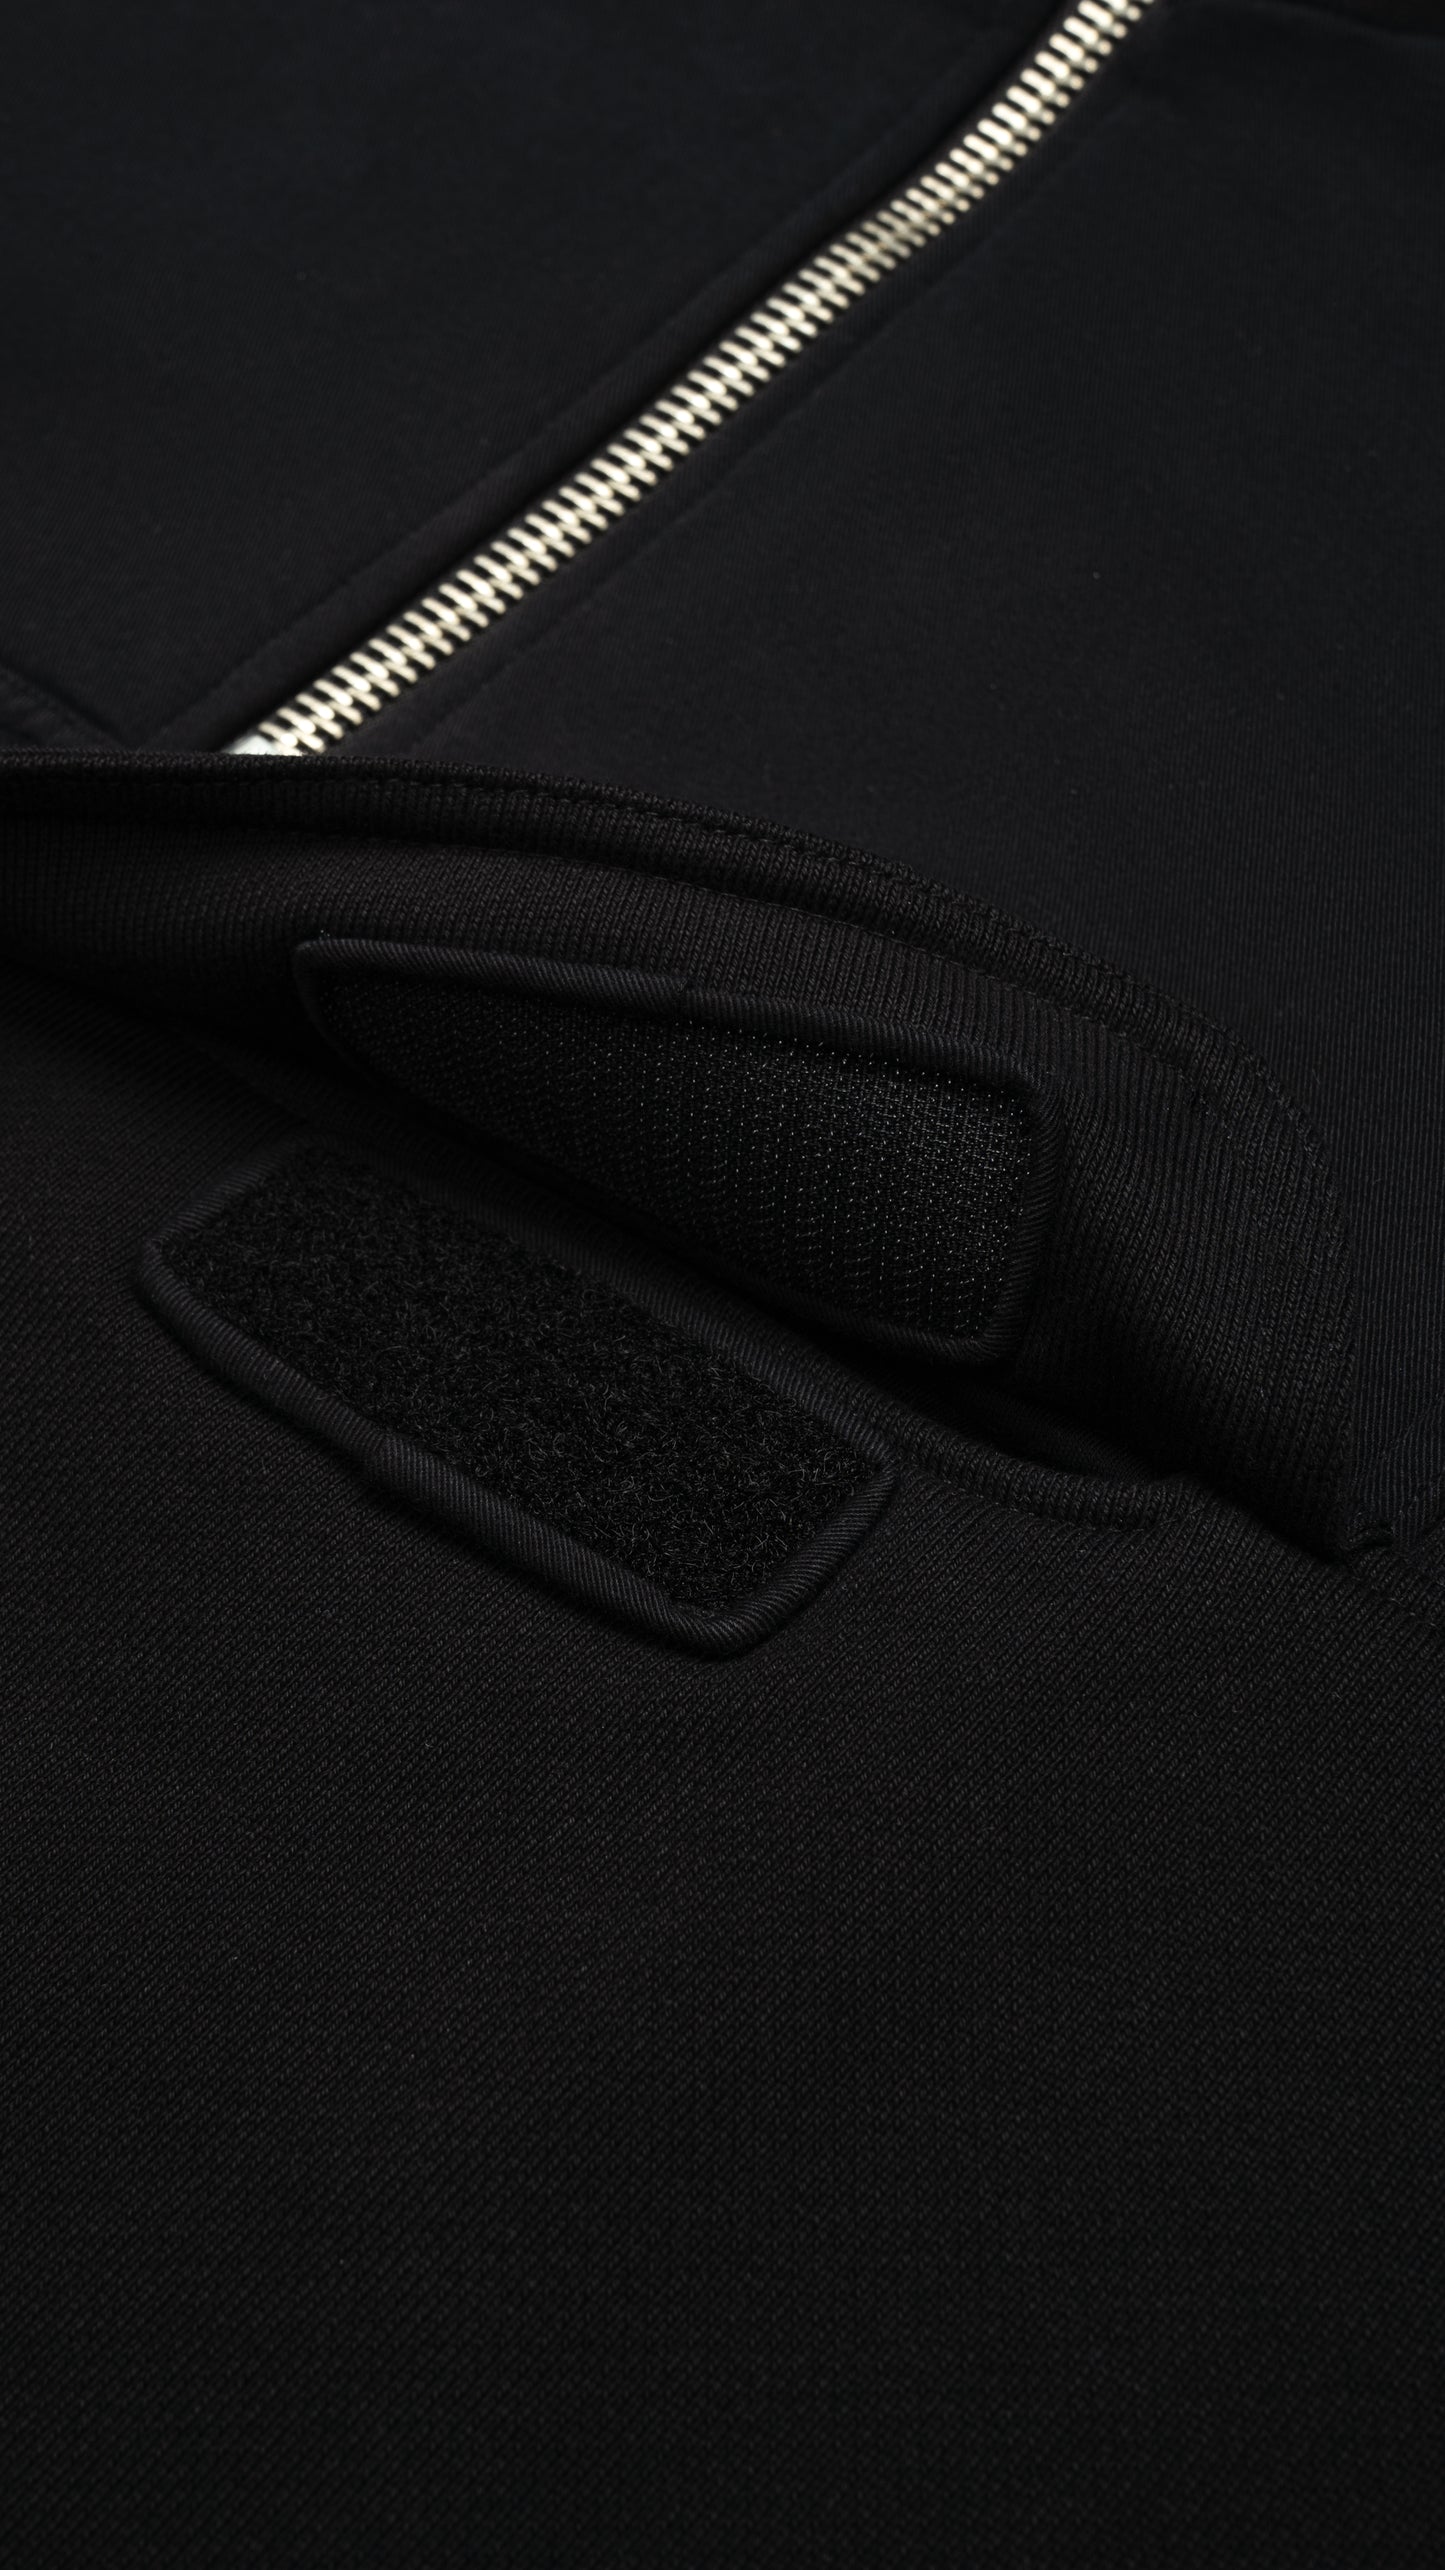 Velcro pocket close up